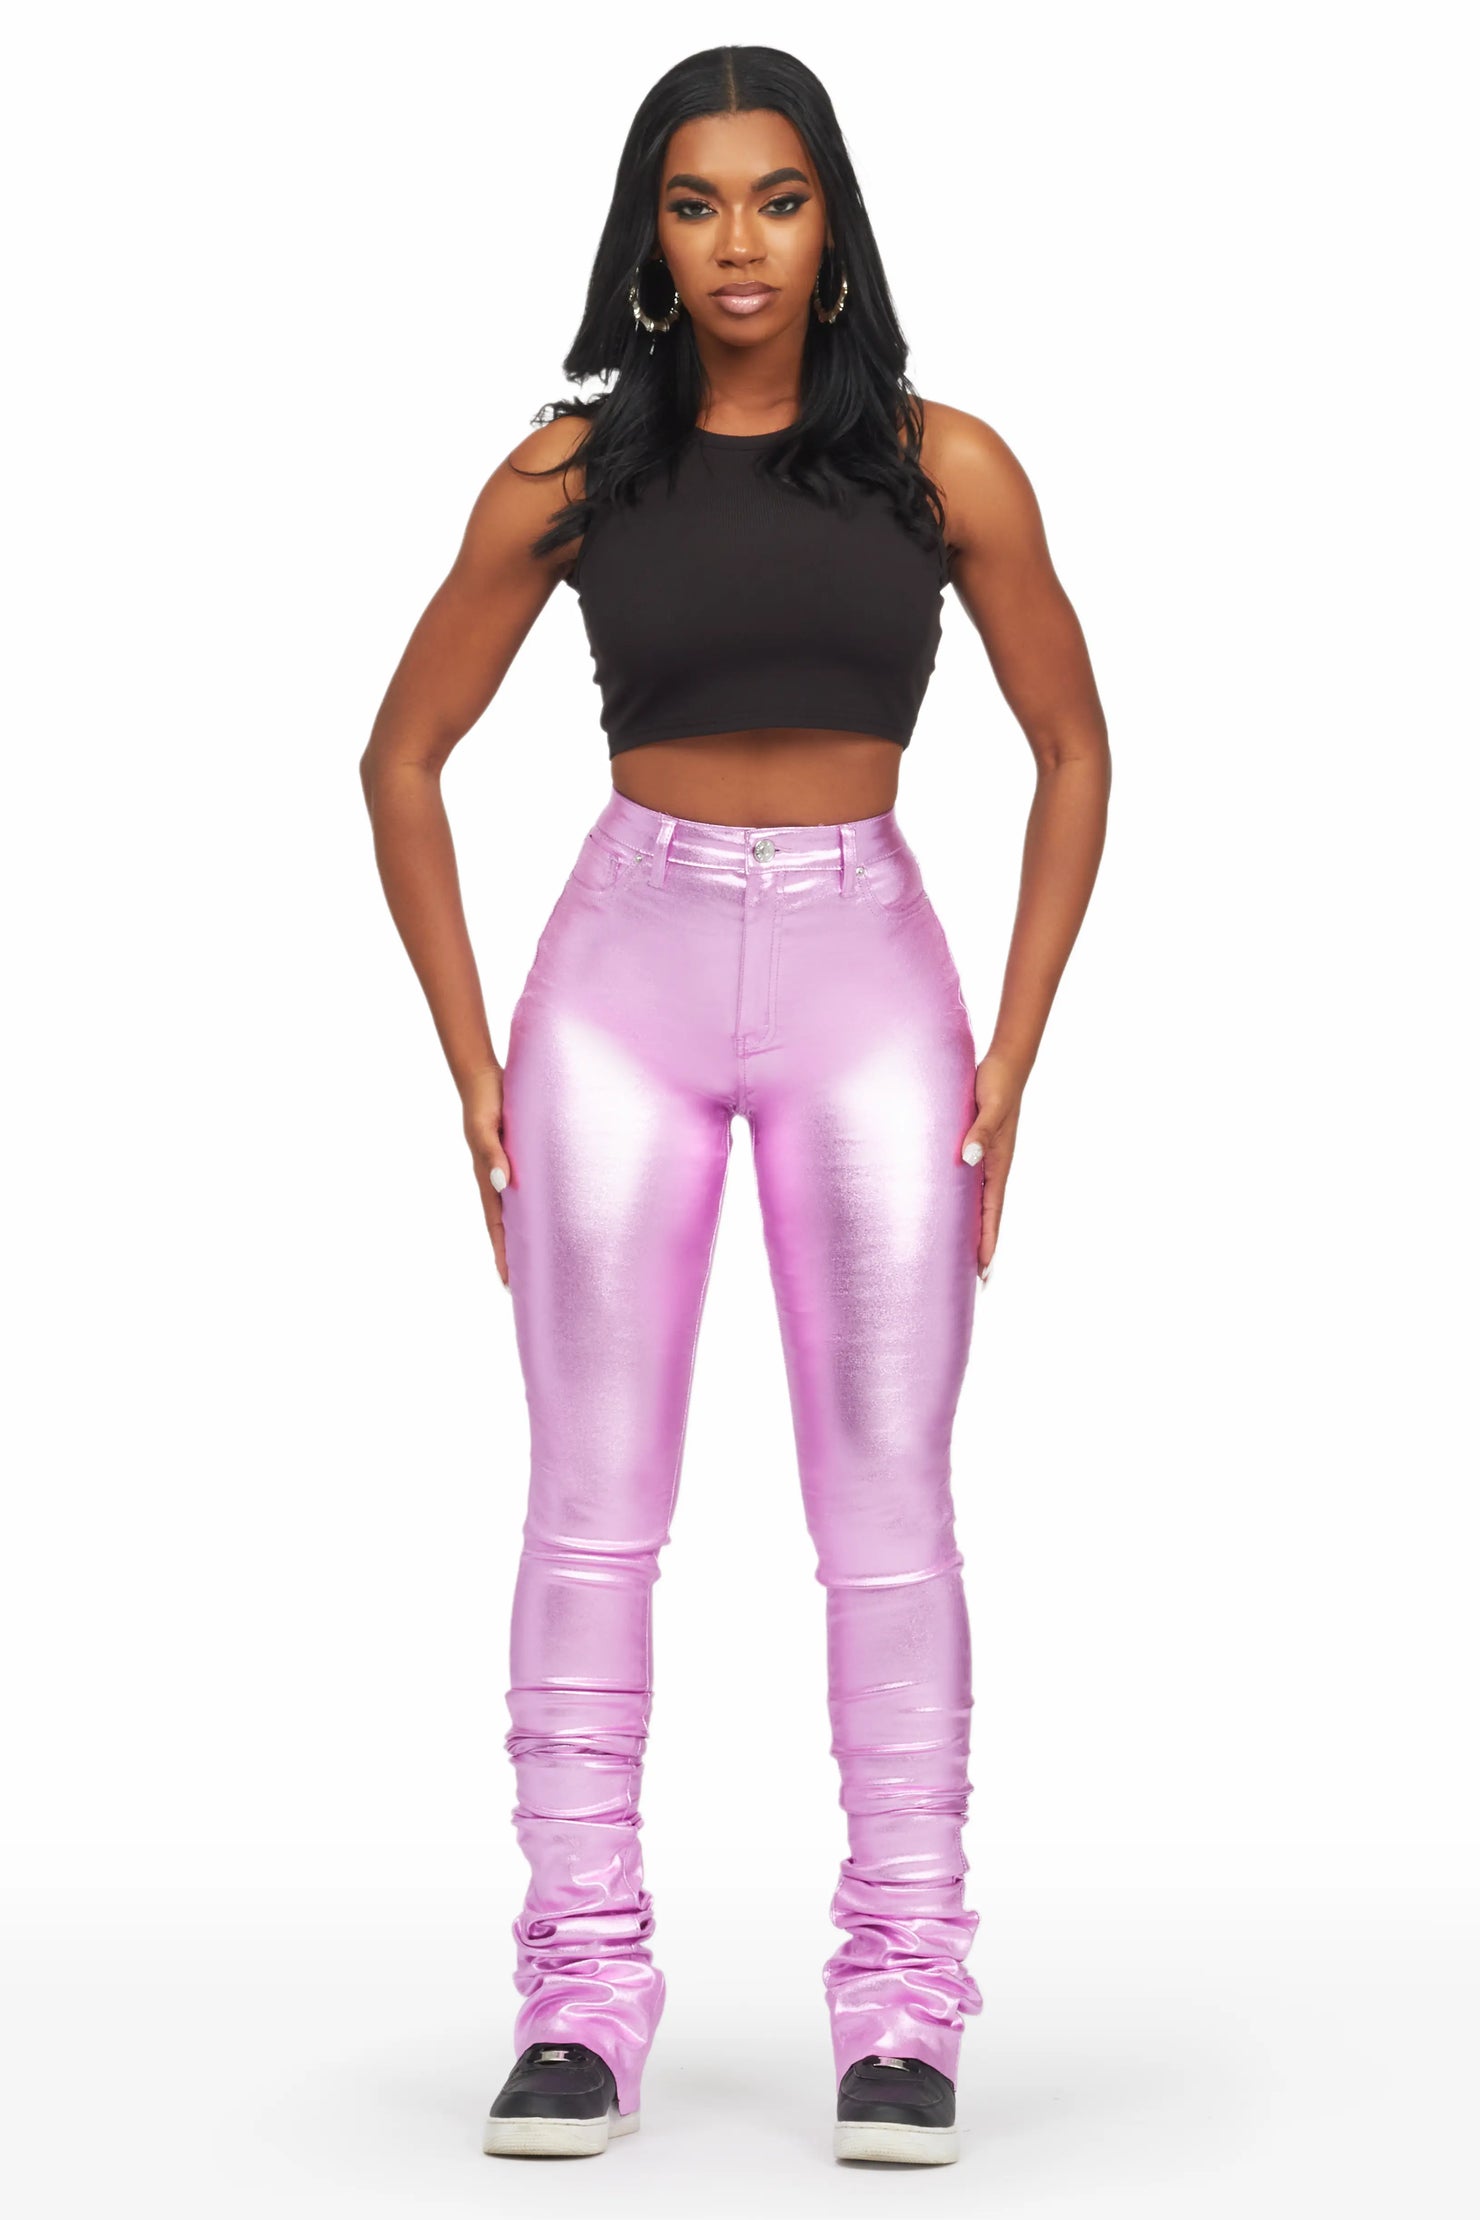 Keyonna Metallic Purple PU Super Stacked Pant